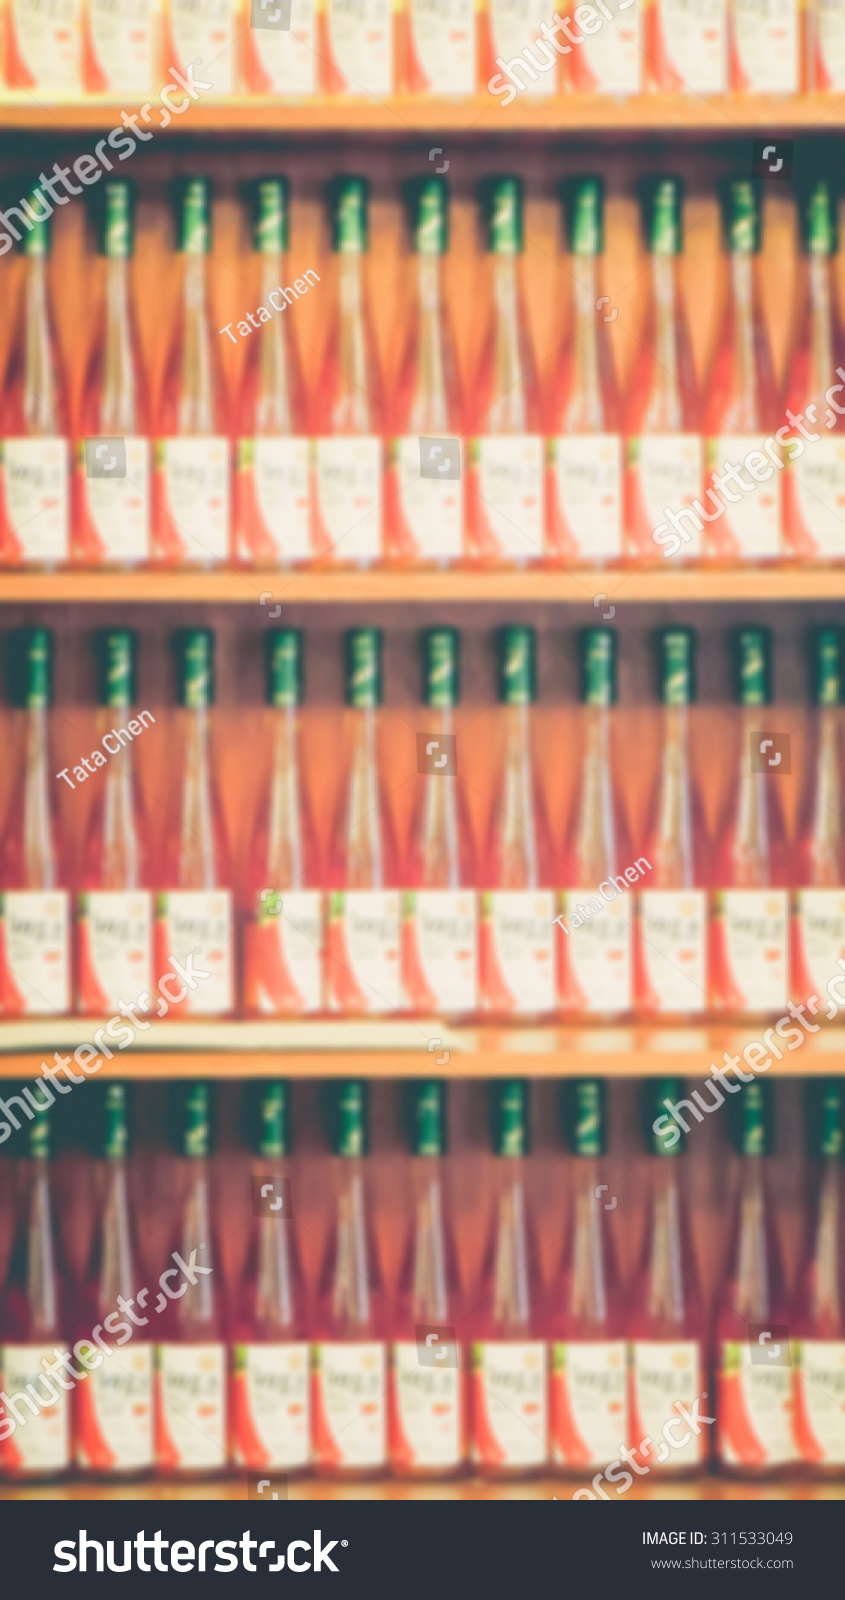 De focused/Blurred image of rows of glass bottled juice. #311533049